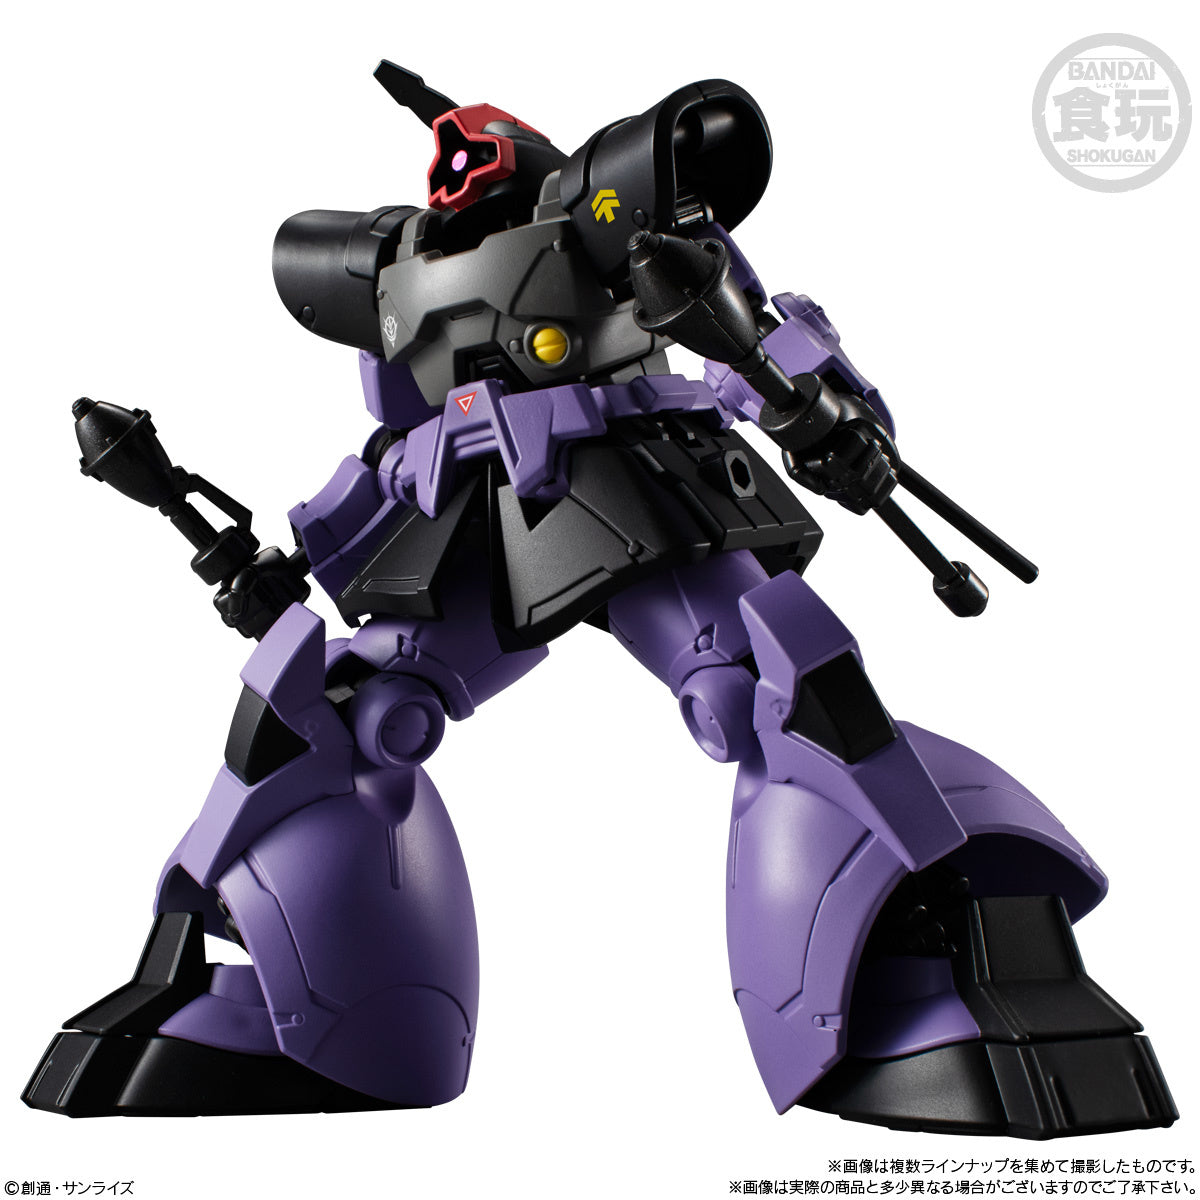 Bandai - Shokugan - Mobile Suit Gundam - G Frame FA UC 0079 Memorial Selection (Box of 10) - Marvelous Toys